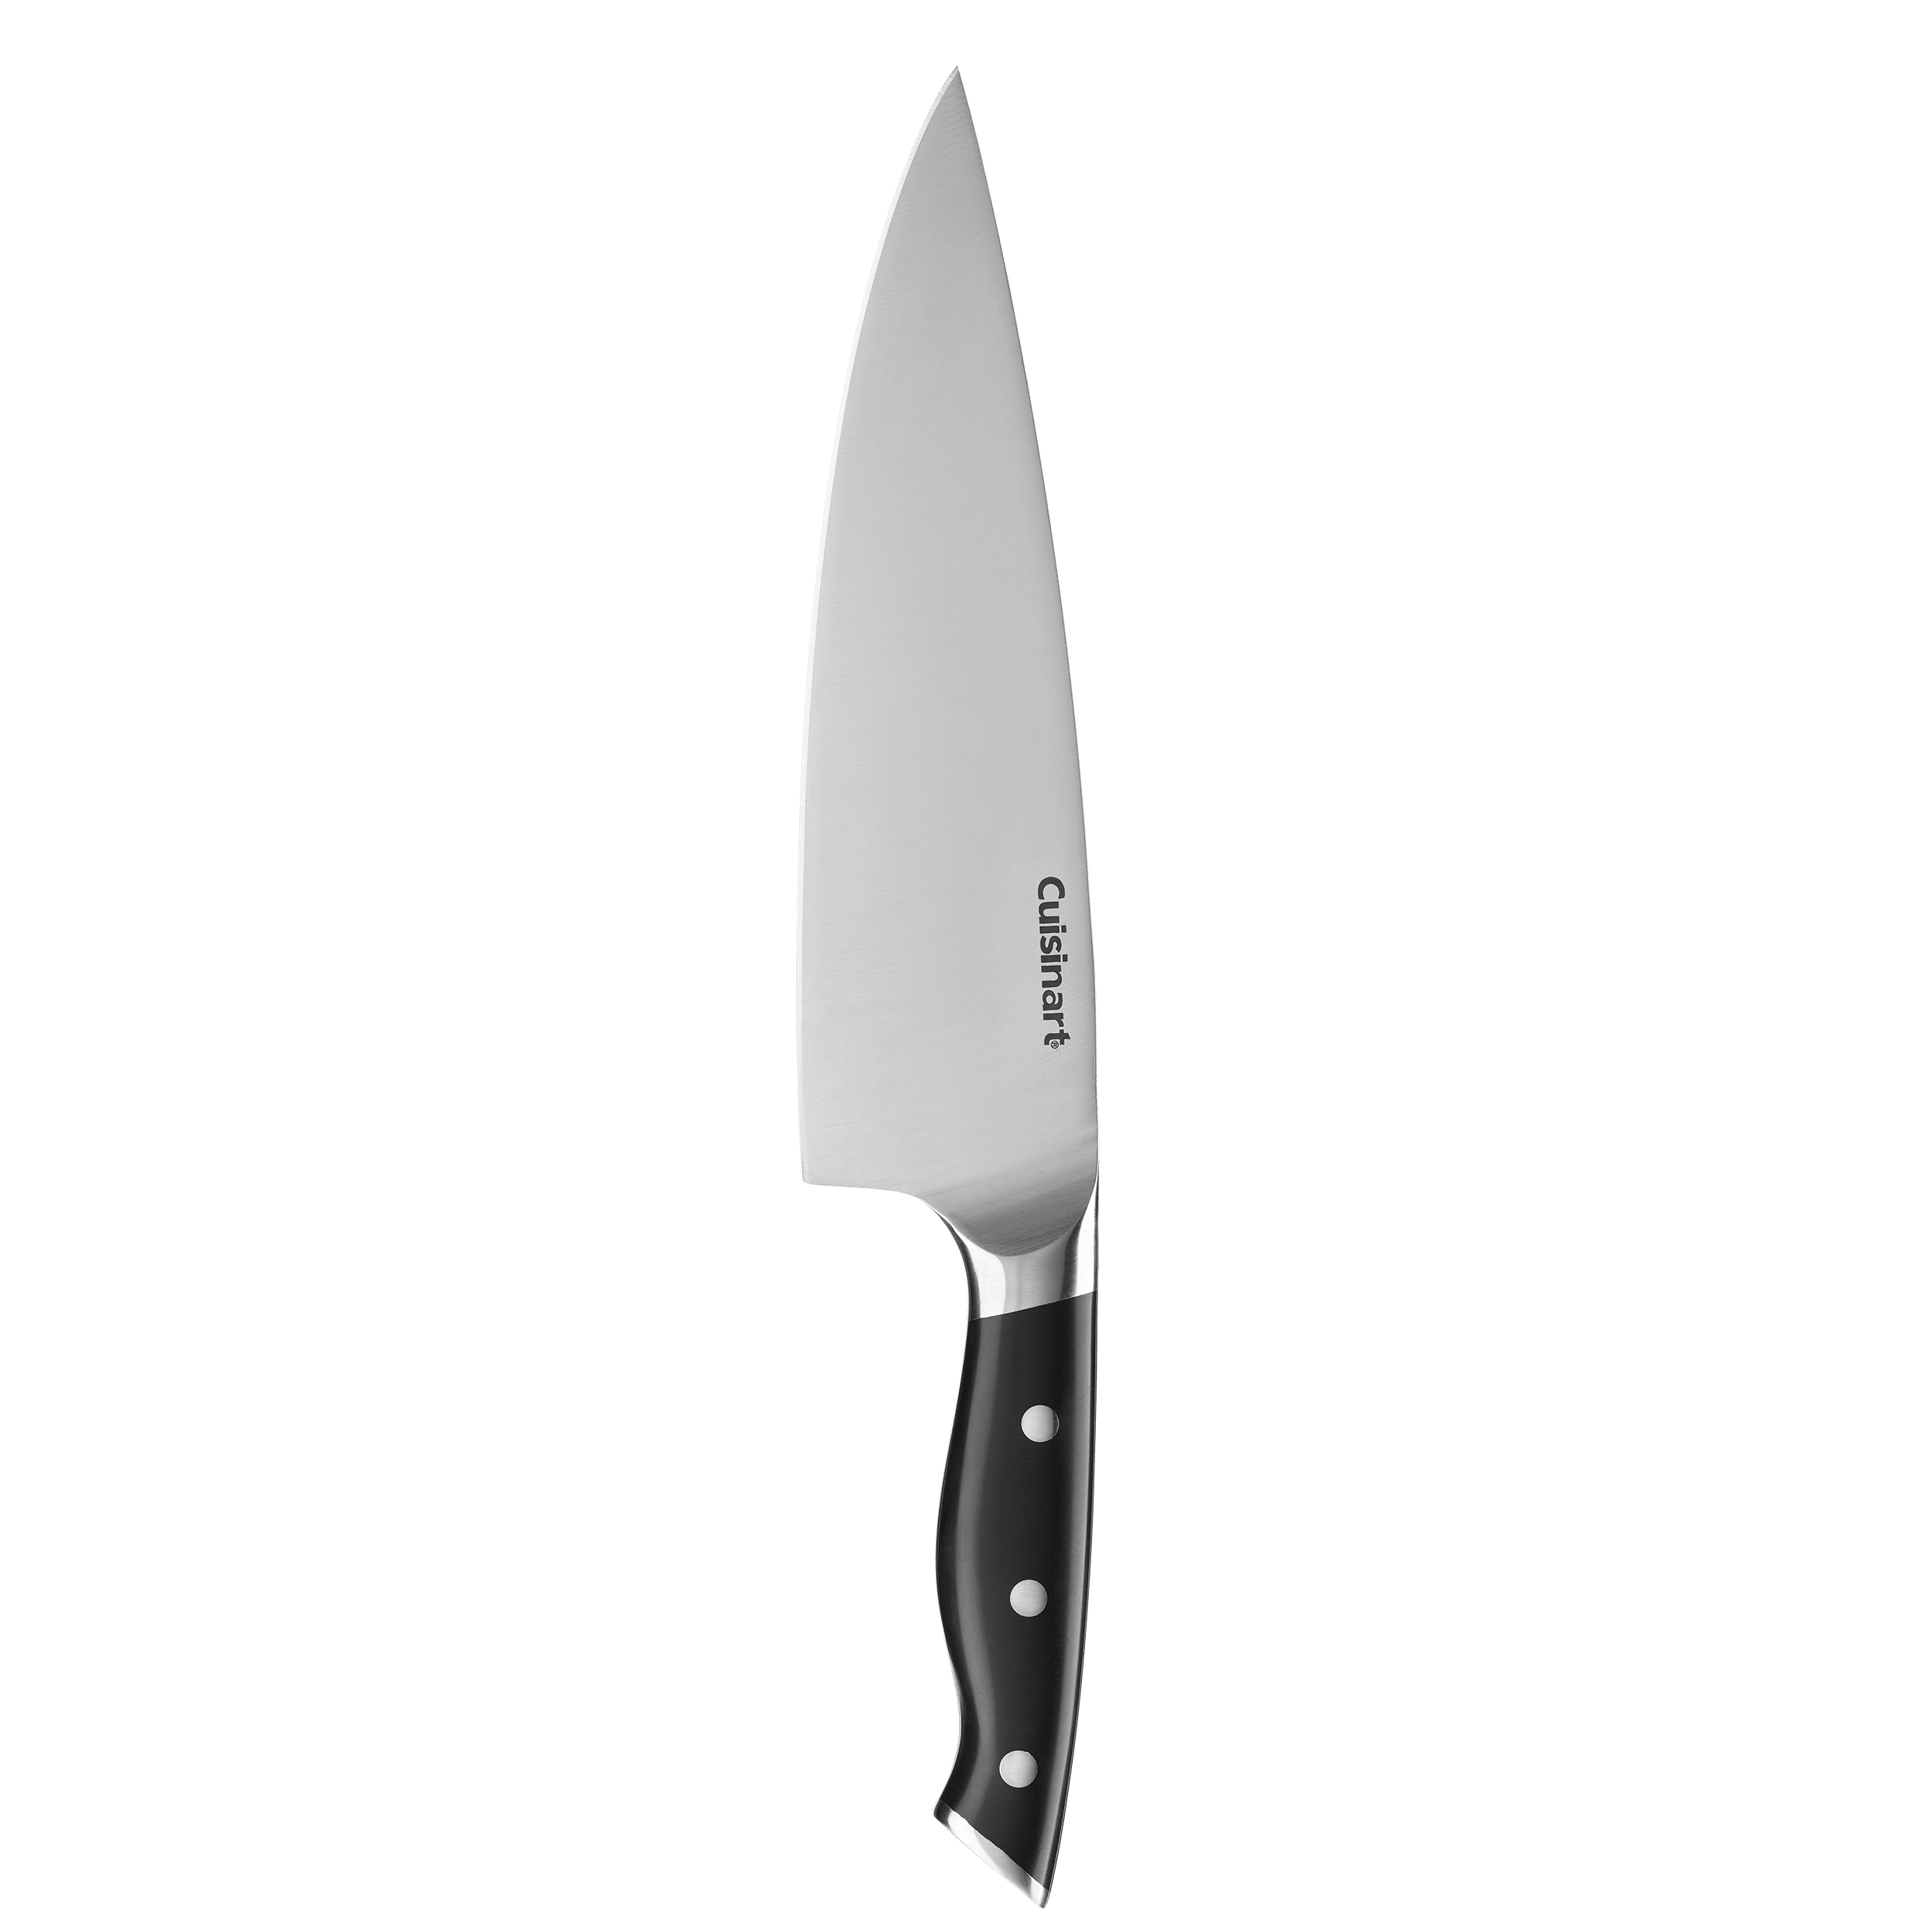 Cuisinart Classic 15-Pc. Rotating Knife Block Set